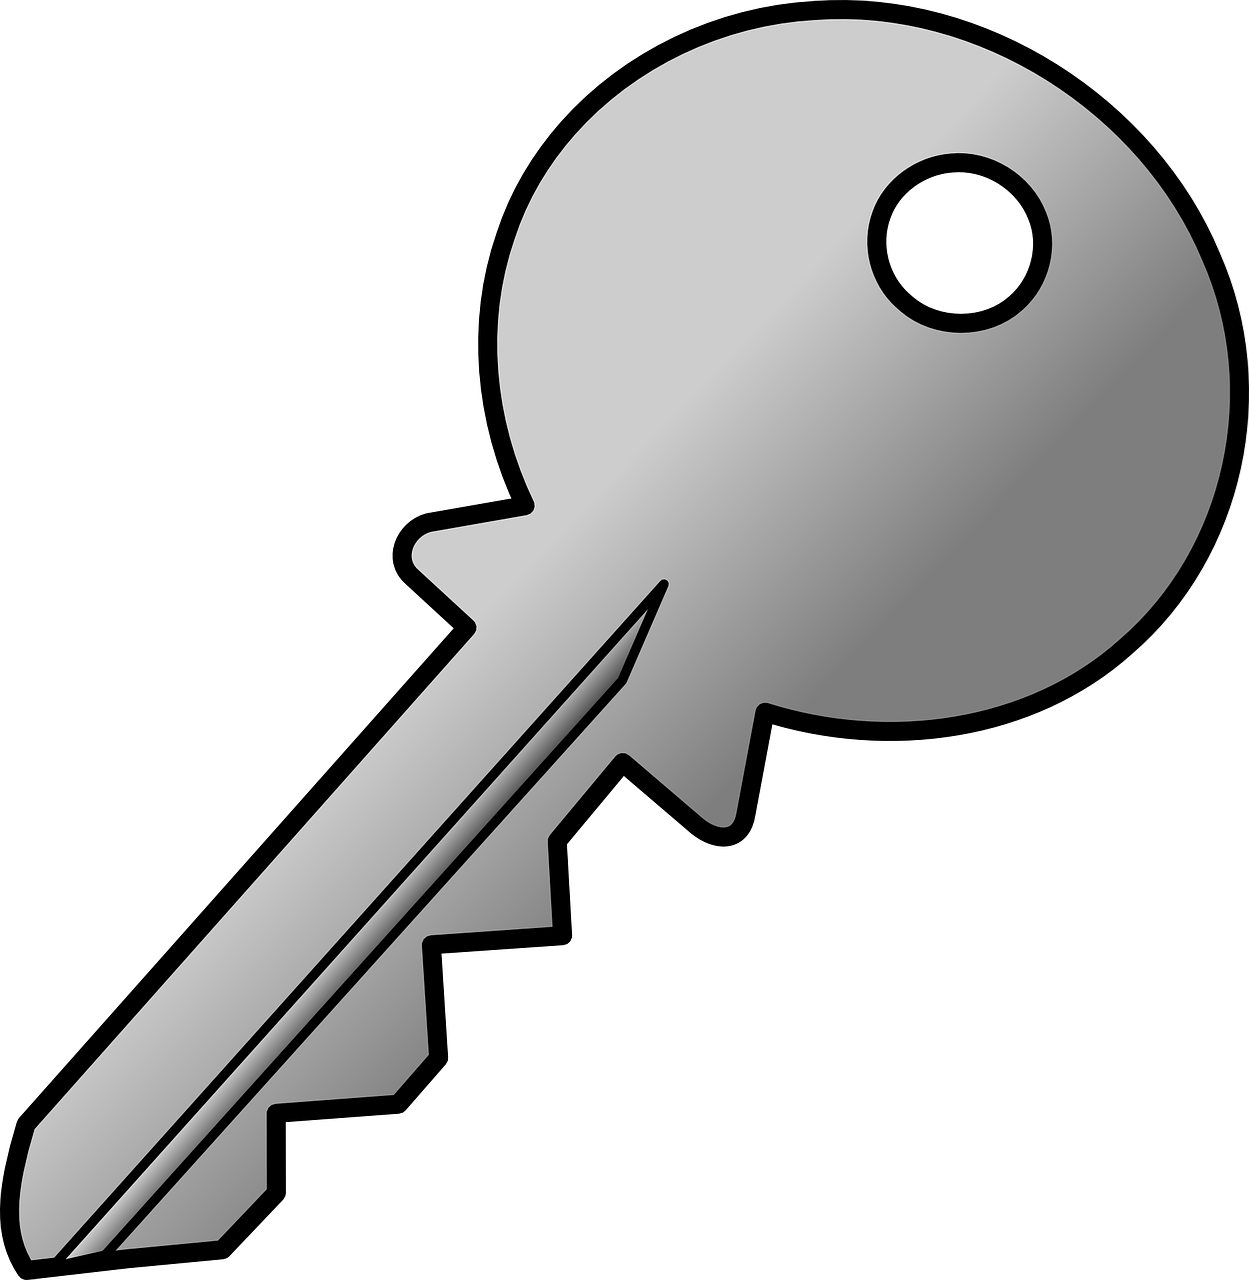 a cartoon key